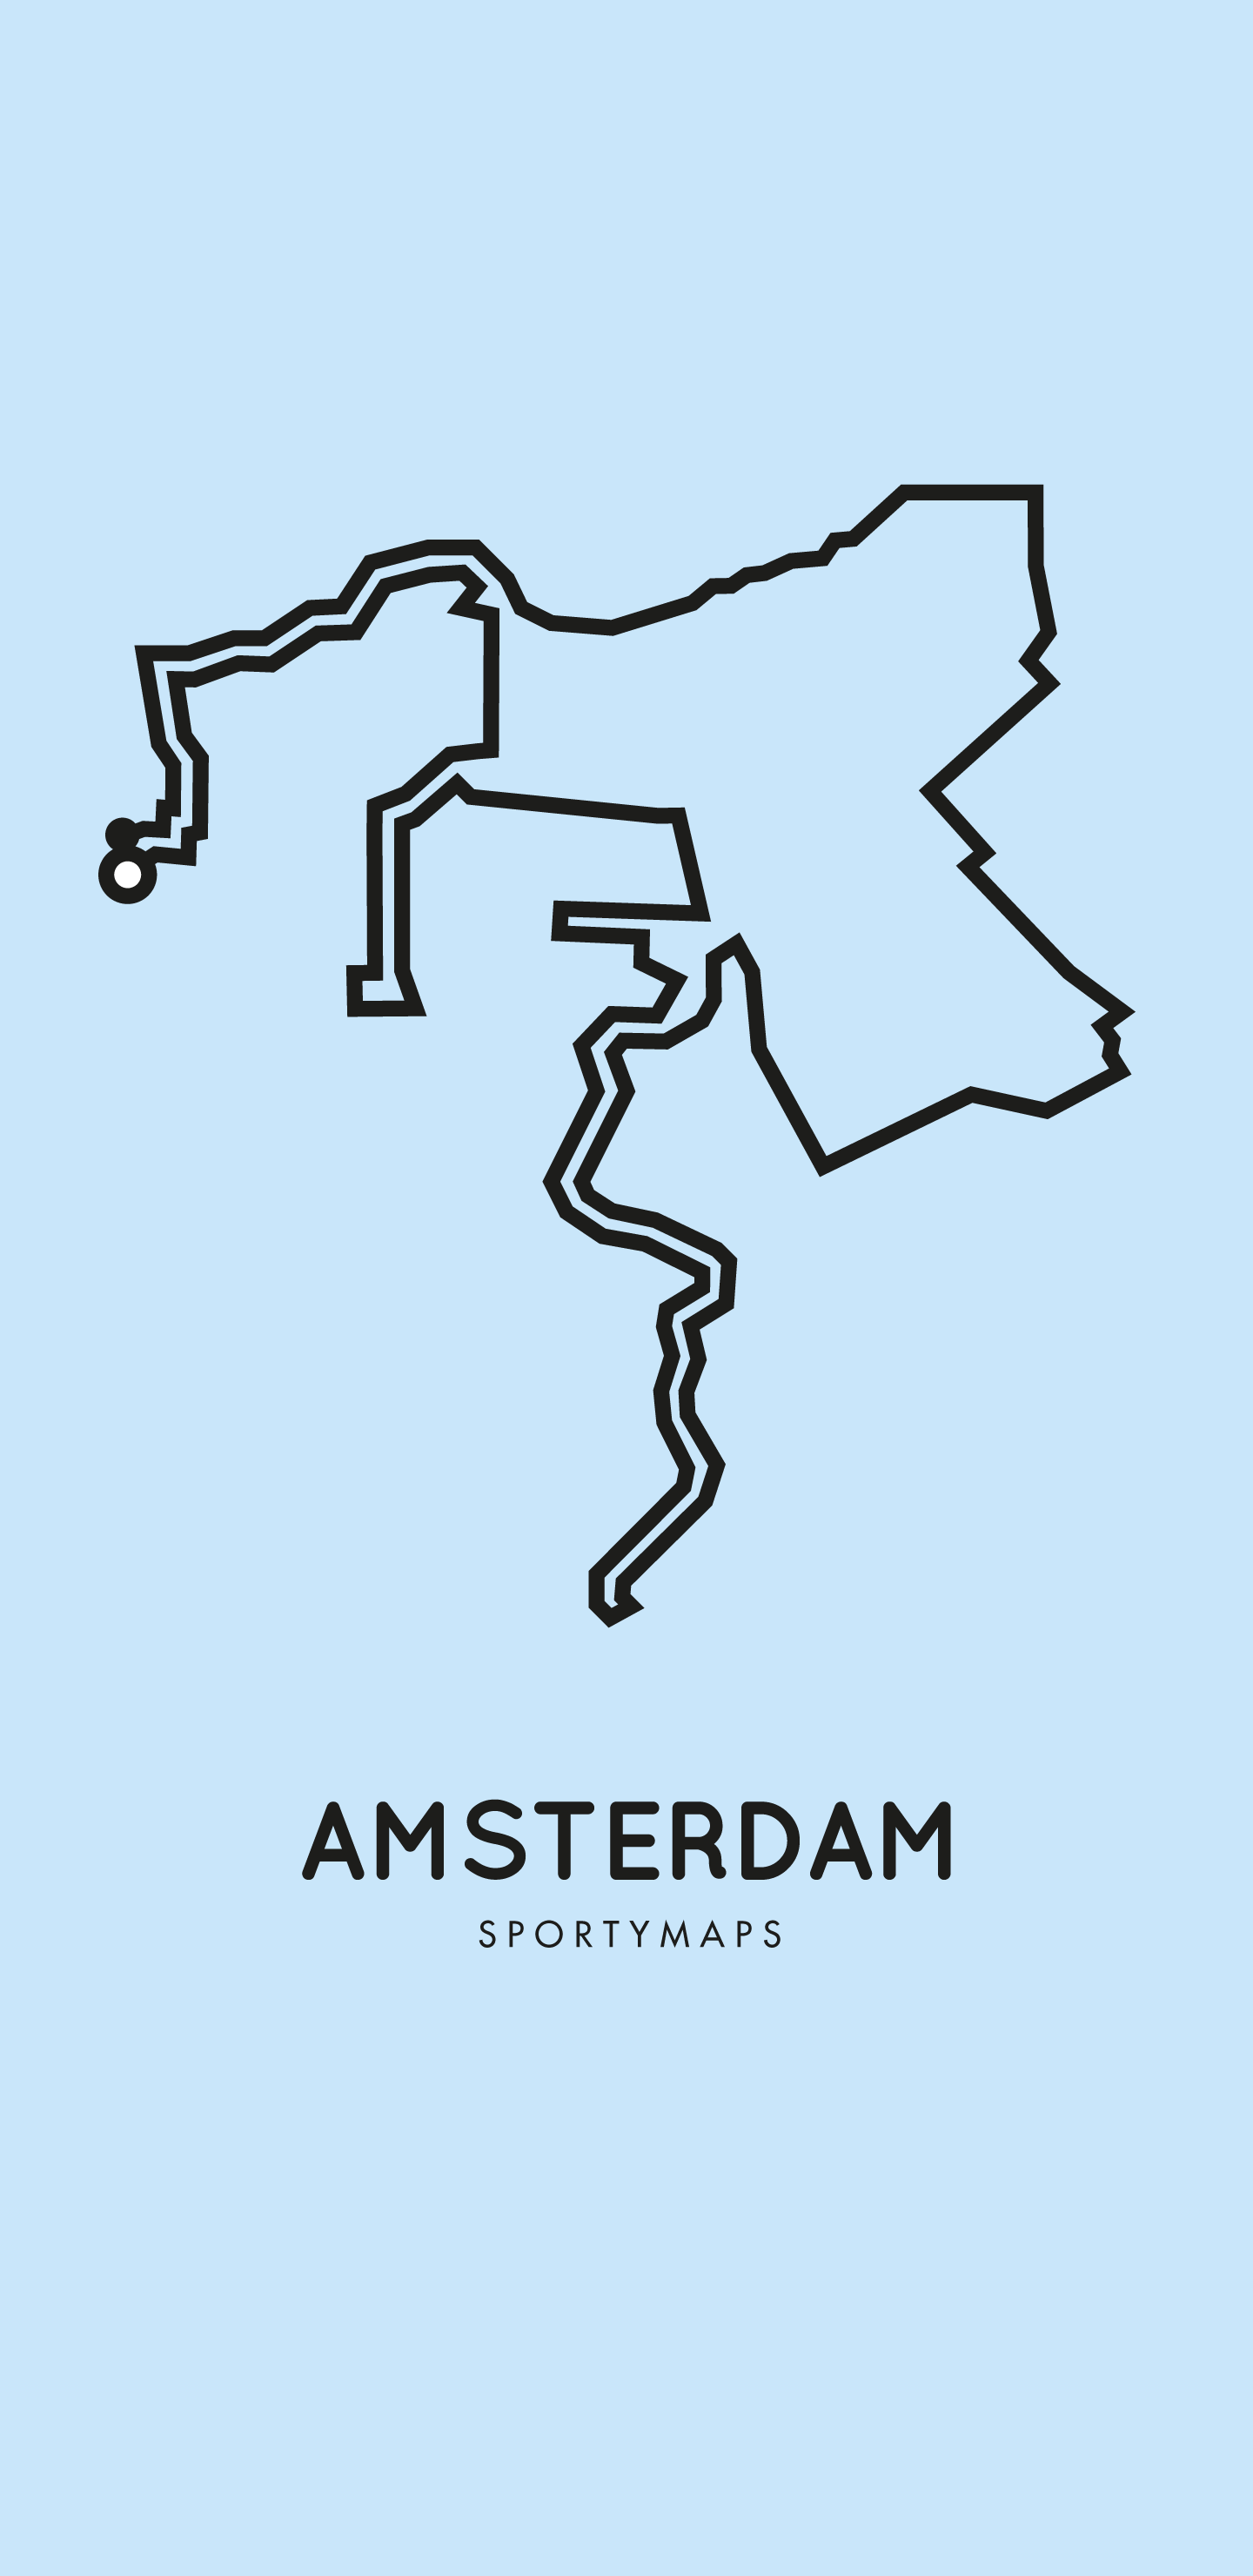 Sportymaps-Amsterdam-marathon-blue